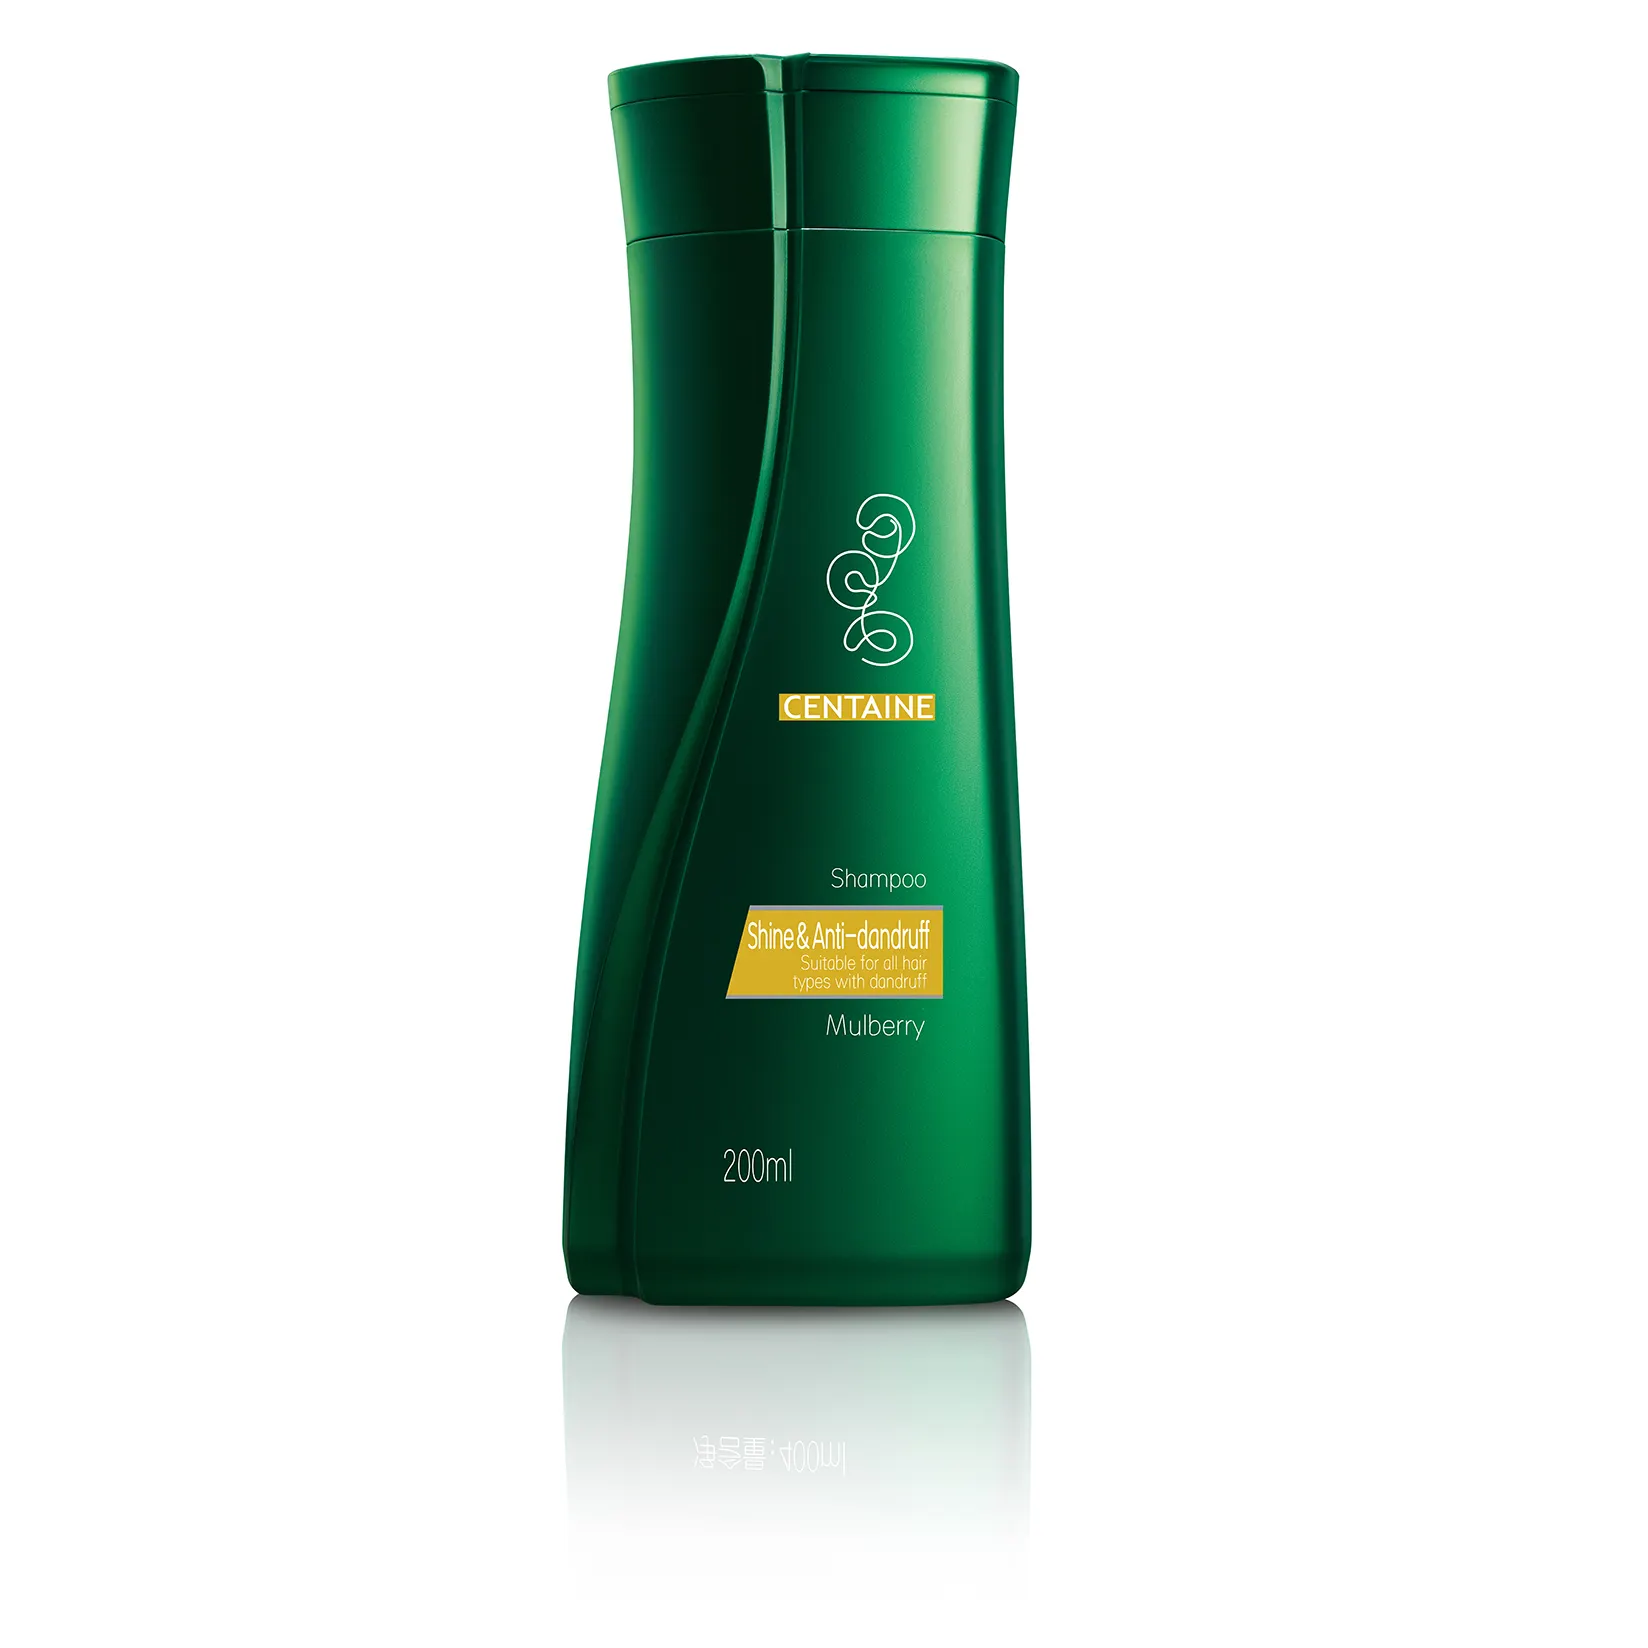 400 ml black all natural regrowth private label professional brands foam liquid plant hair care shampoo